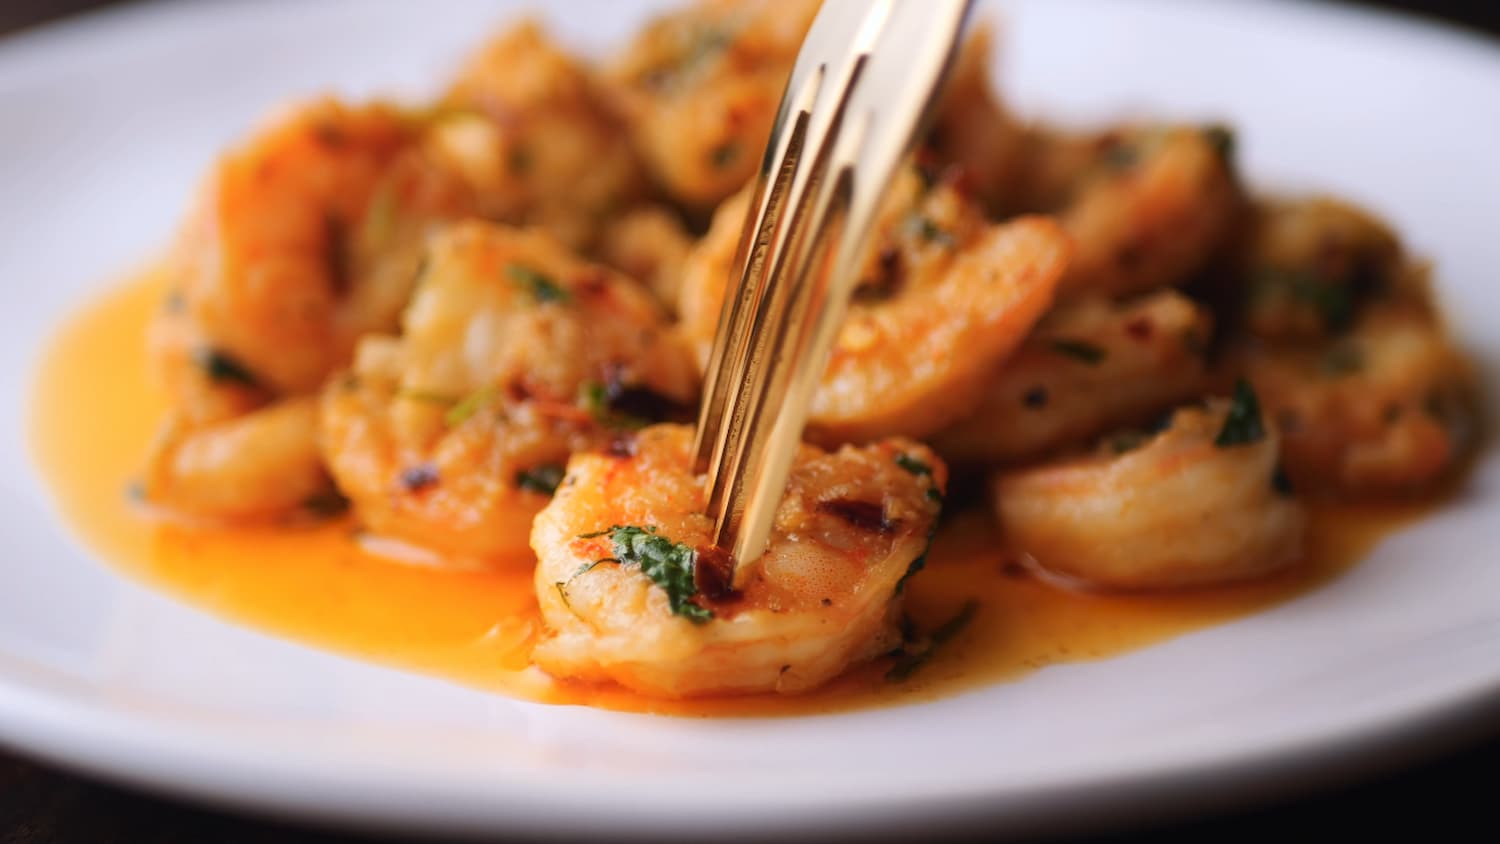 Spicy Garlic Shrimp in a plate